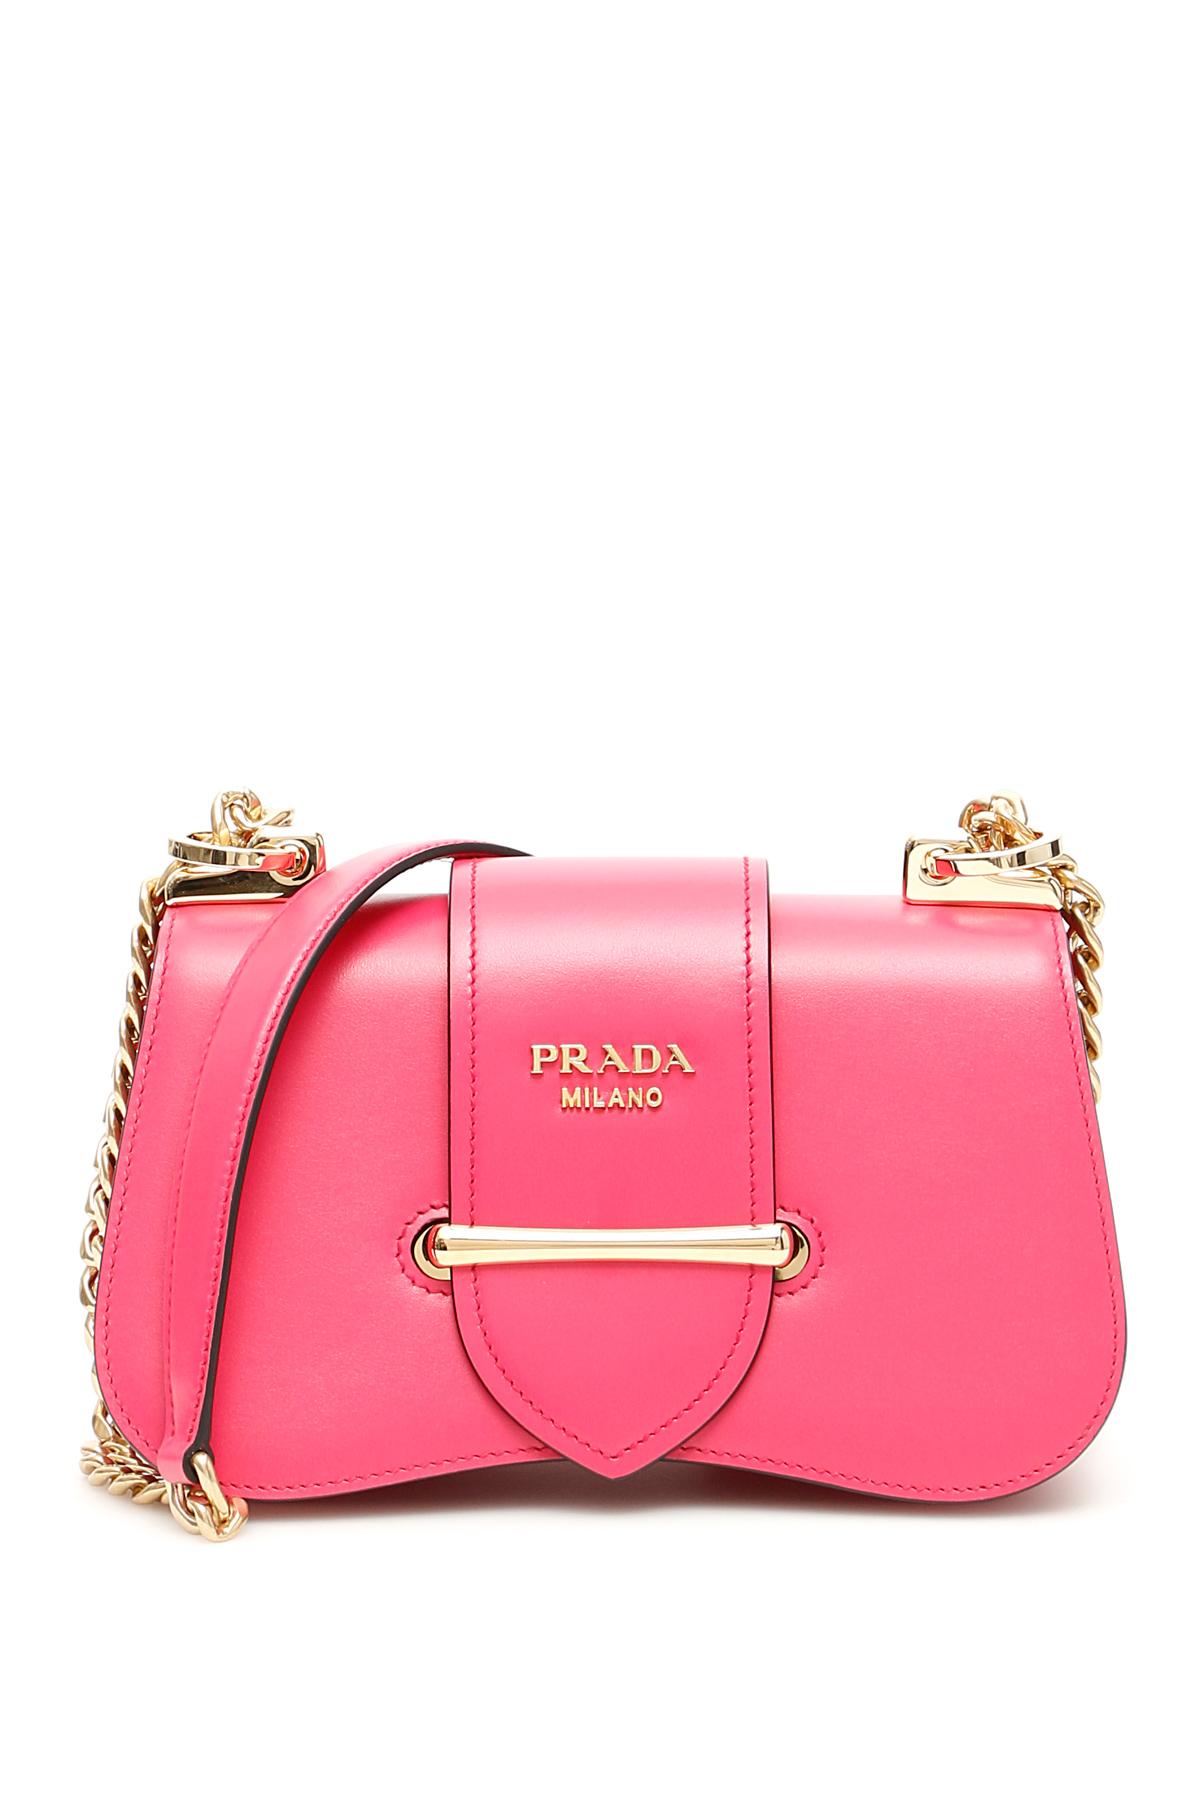 Prada Leather Small Sidonie Bag in Pink - Lyst